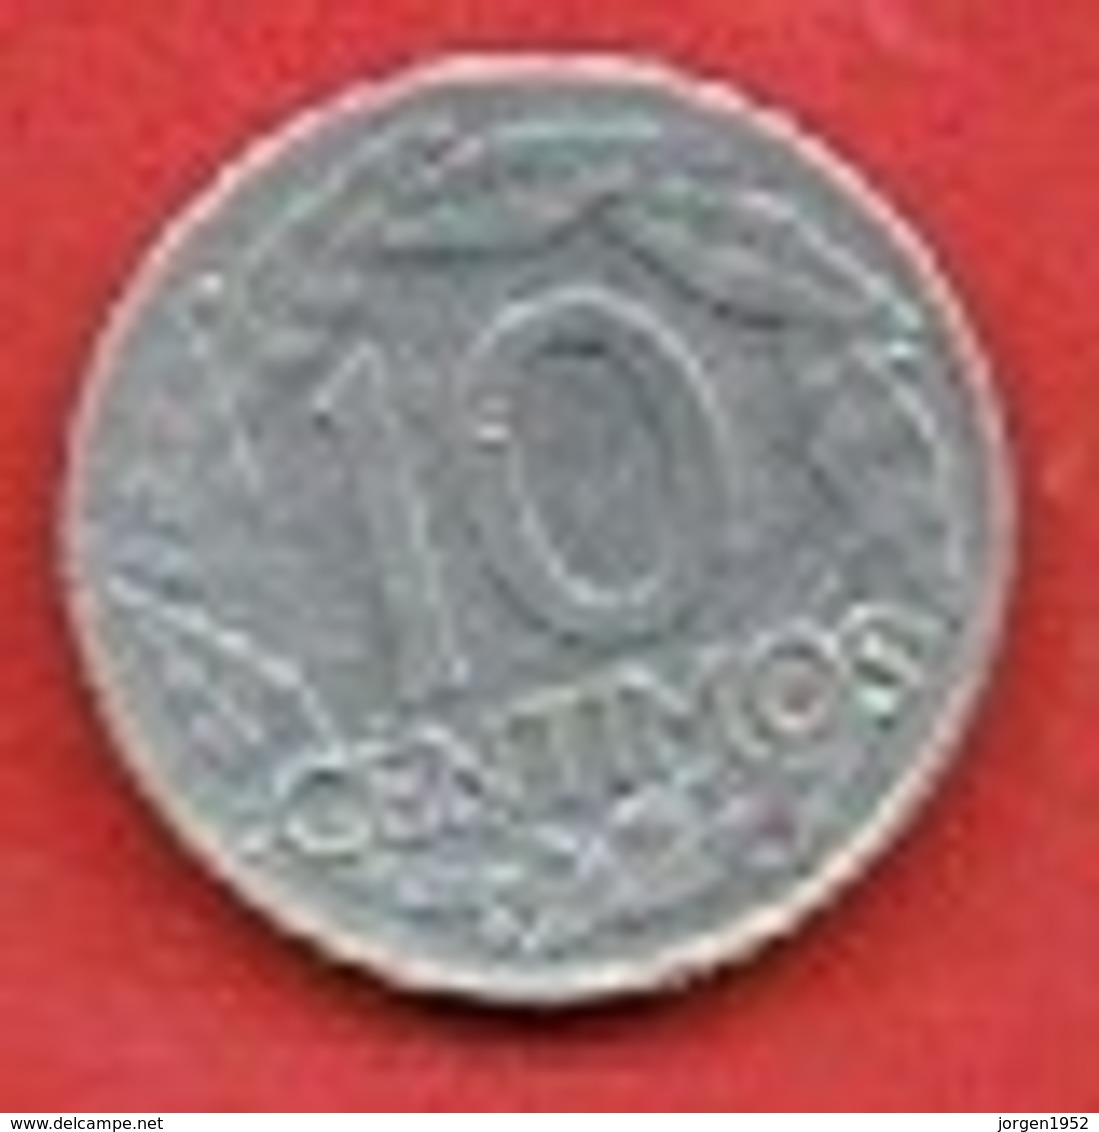 SPAIN  #  10 Centimos - Francisco Franco  FROM 1959 - 10 Céntimos